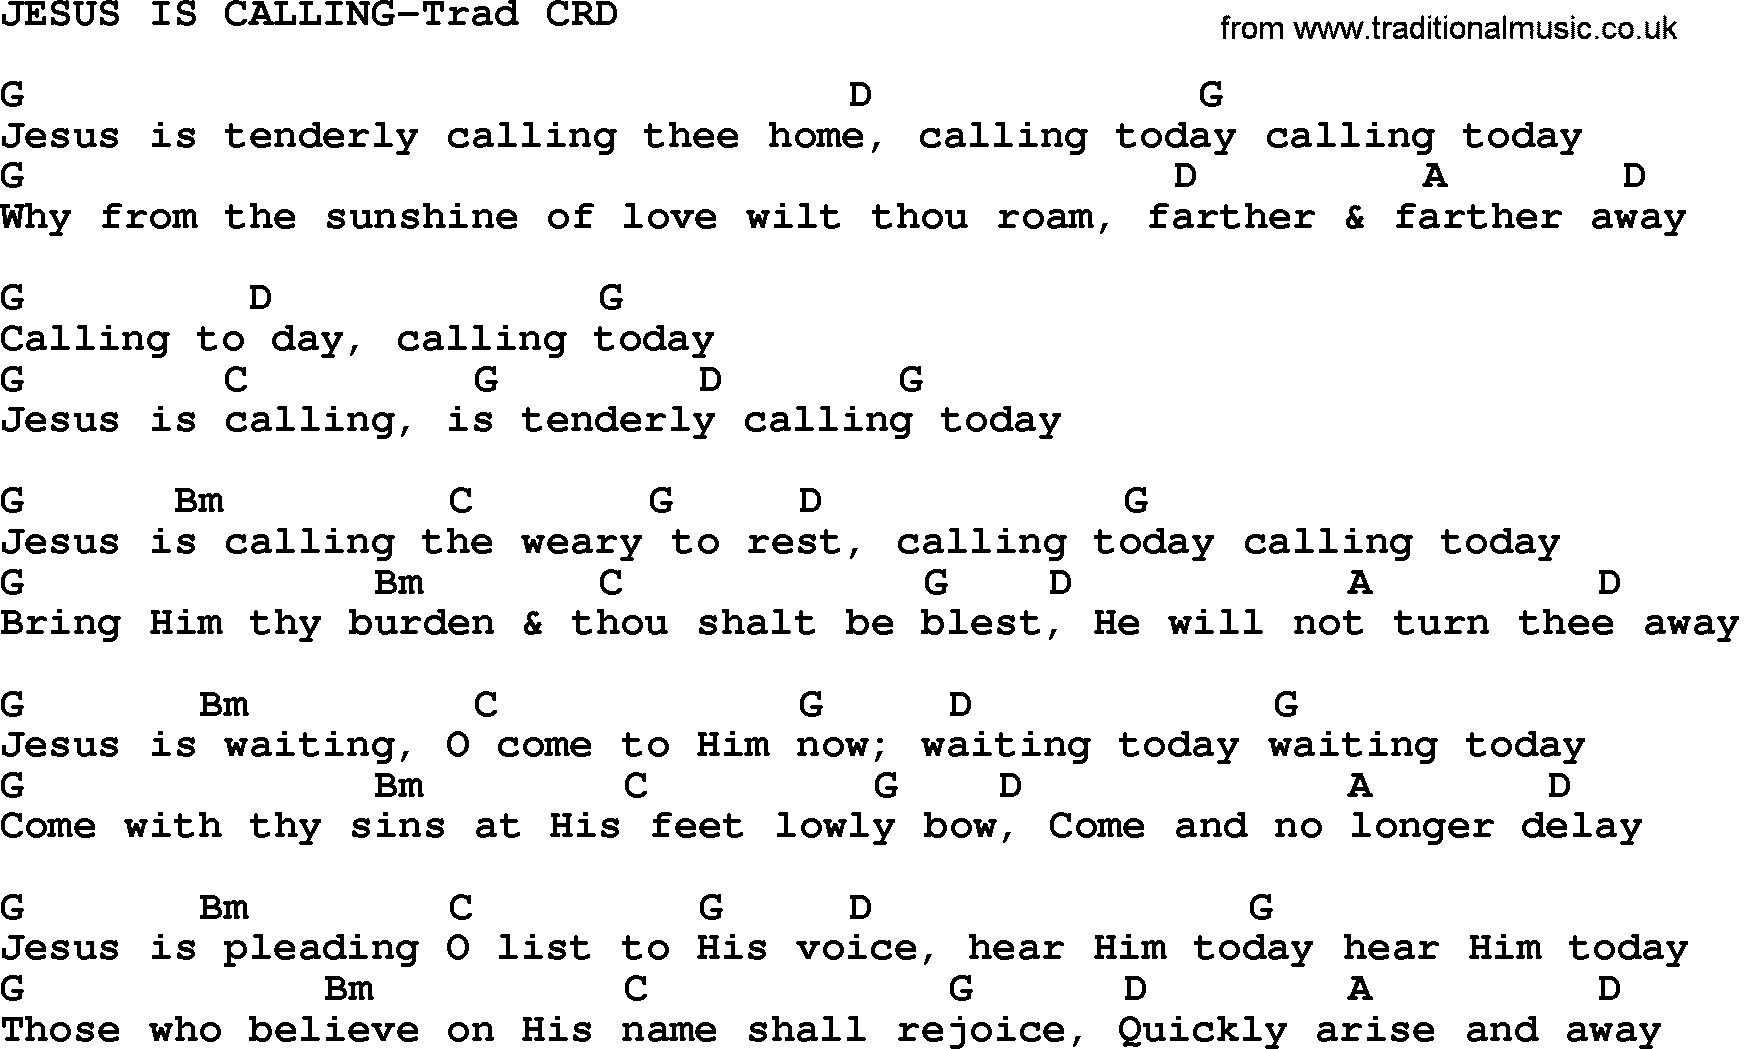 Gospel Song: Jesus Is Calling-Trad, lyrics and chords.